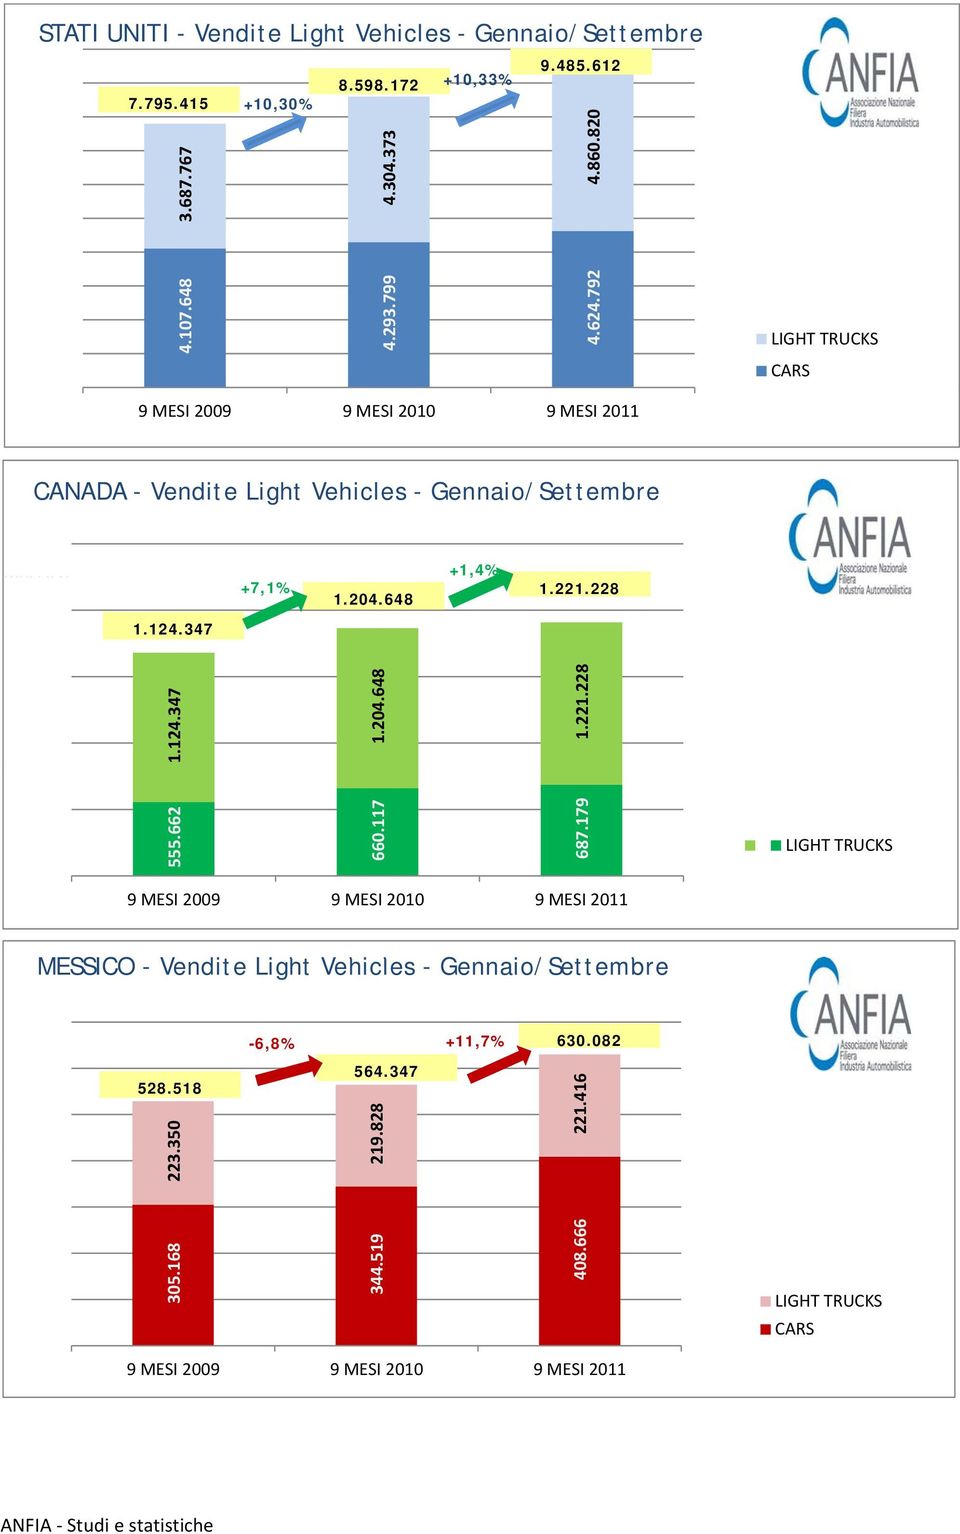 228 CANADA - Vendite Light Vehicles - Gennaio/Settembre +1,4% messico +7,1% 9 MESI 2009 9 MESI 1.204.648 2010 9 MESI 2011 1.221.228 CARS 1.124.347 305.168 344.519 408.666 LIGHT TRUCKS 223.350 219.